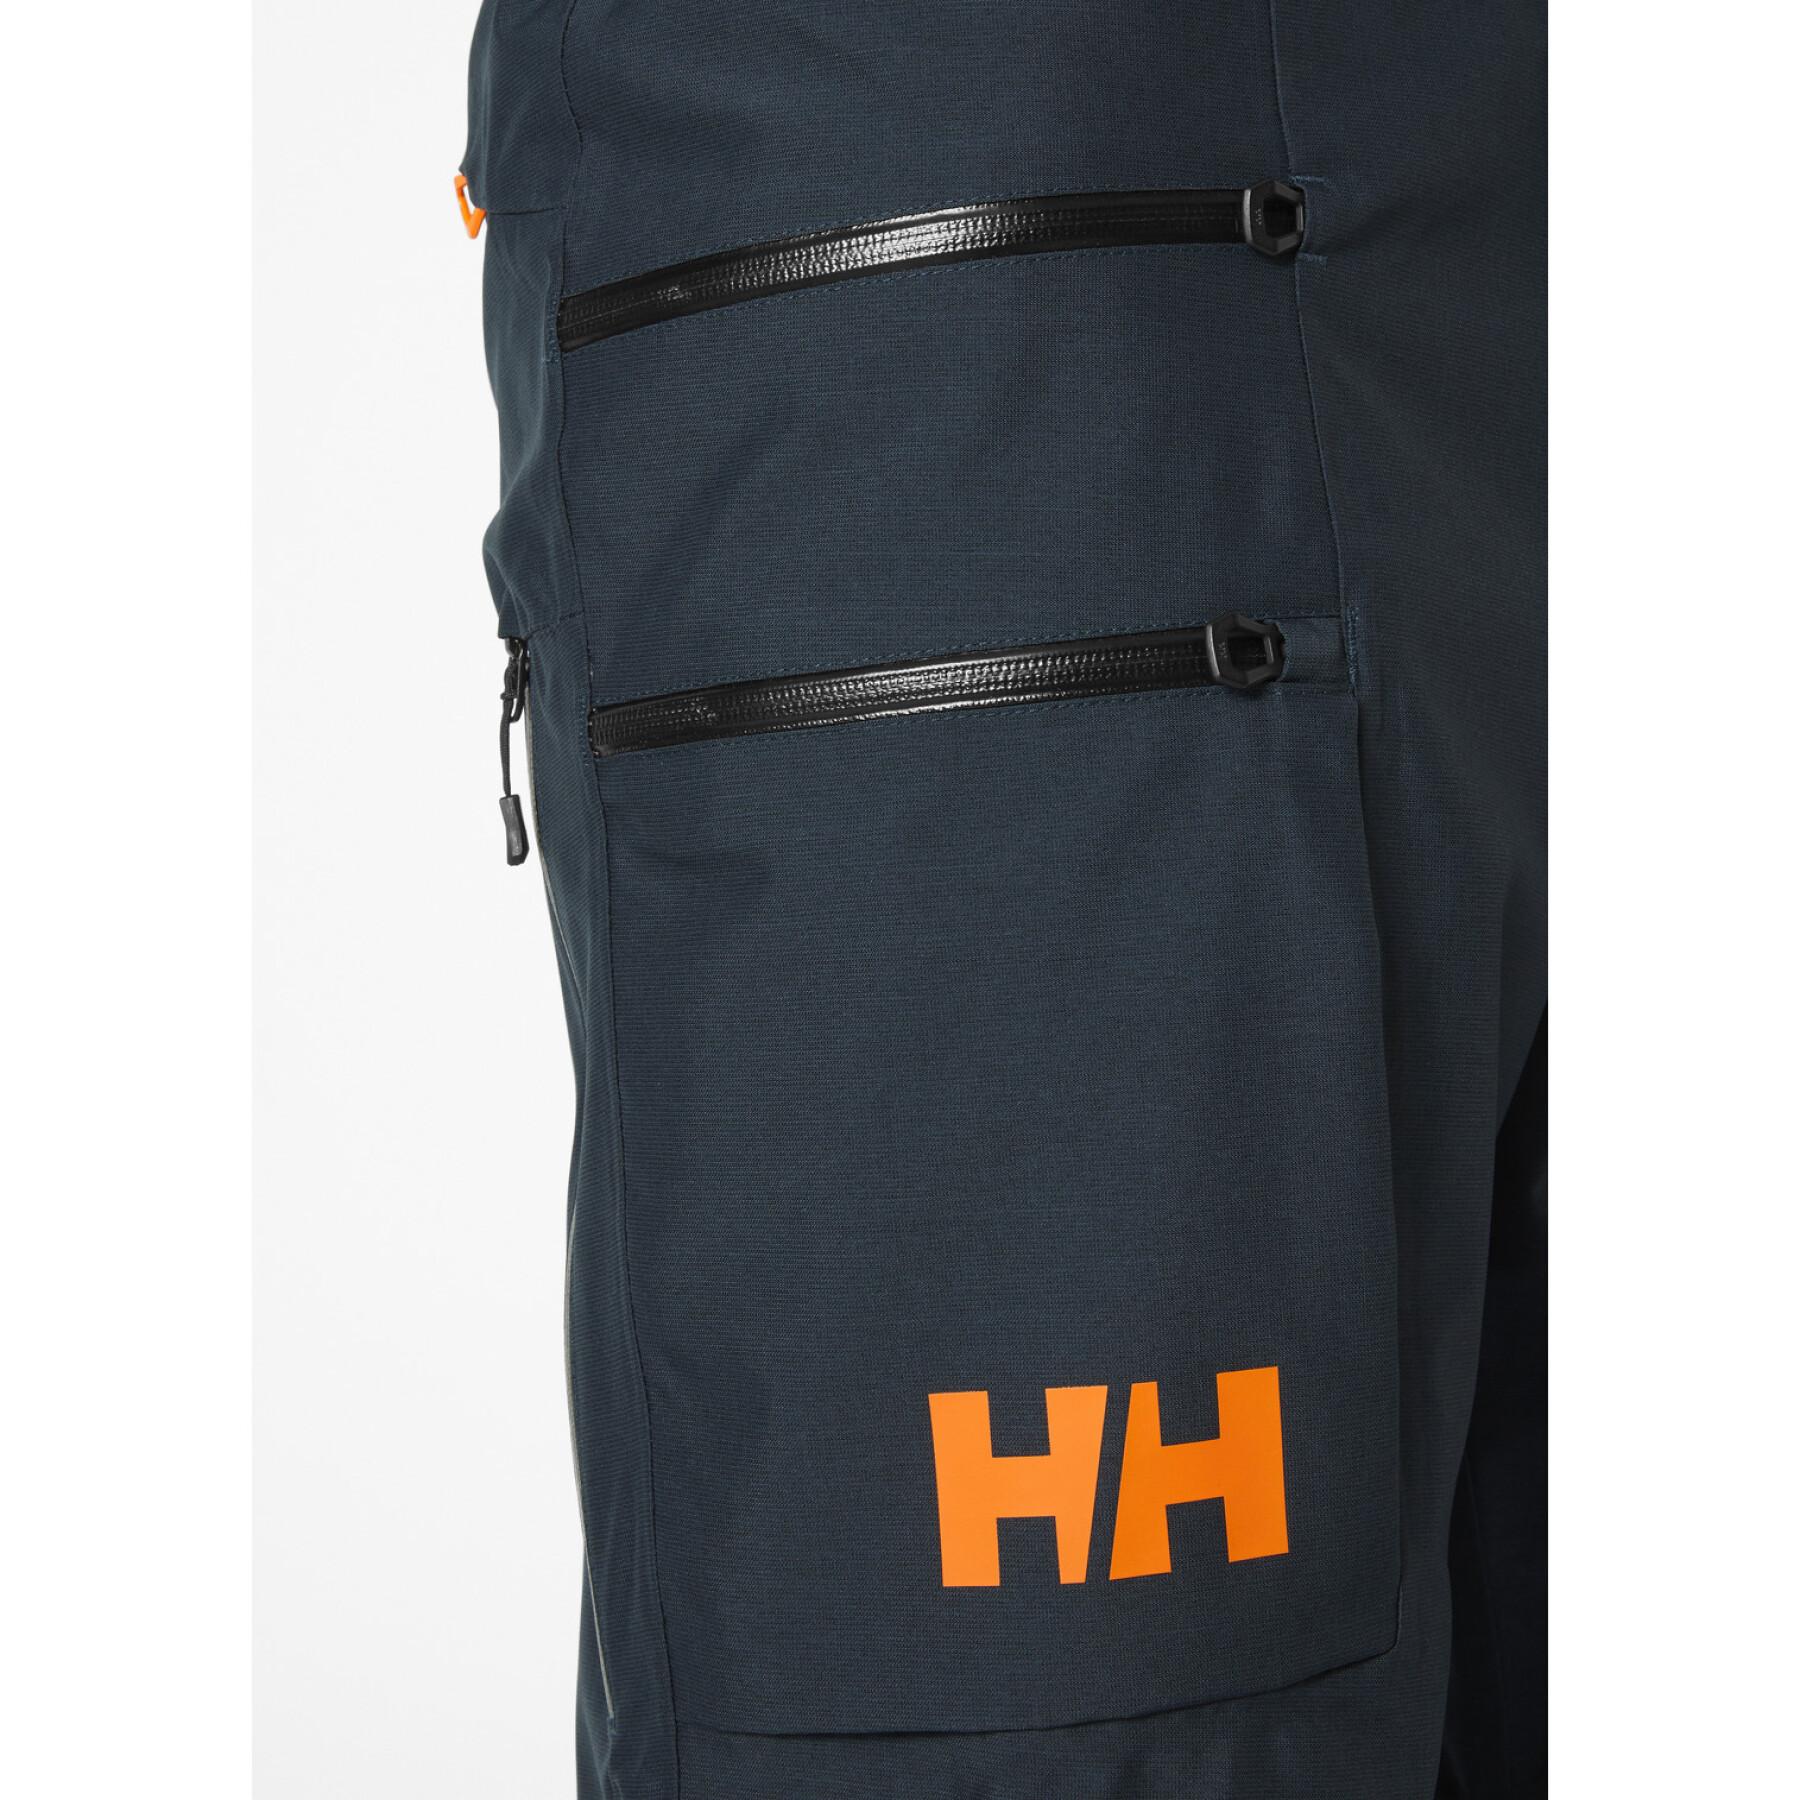 Pantalon de ski Helly Hansen Garibaldi 2.0